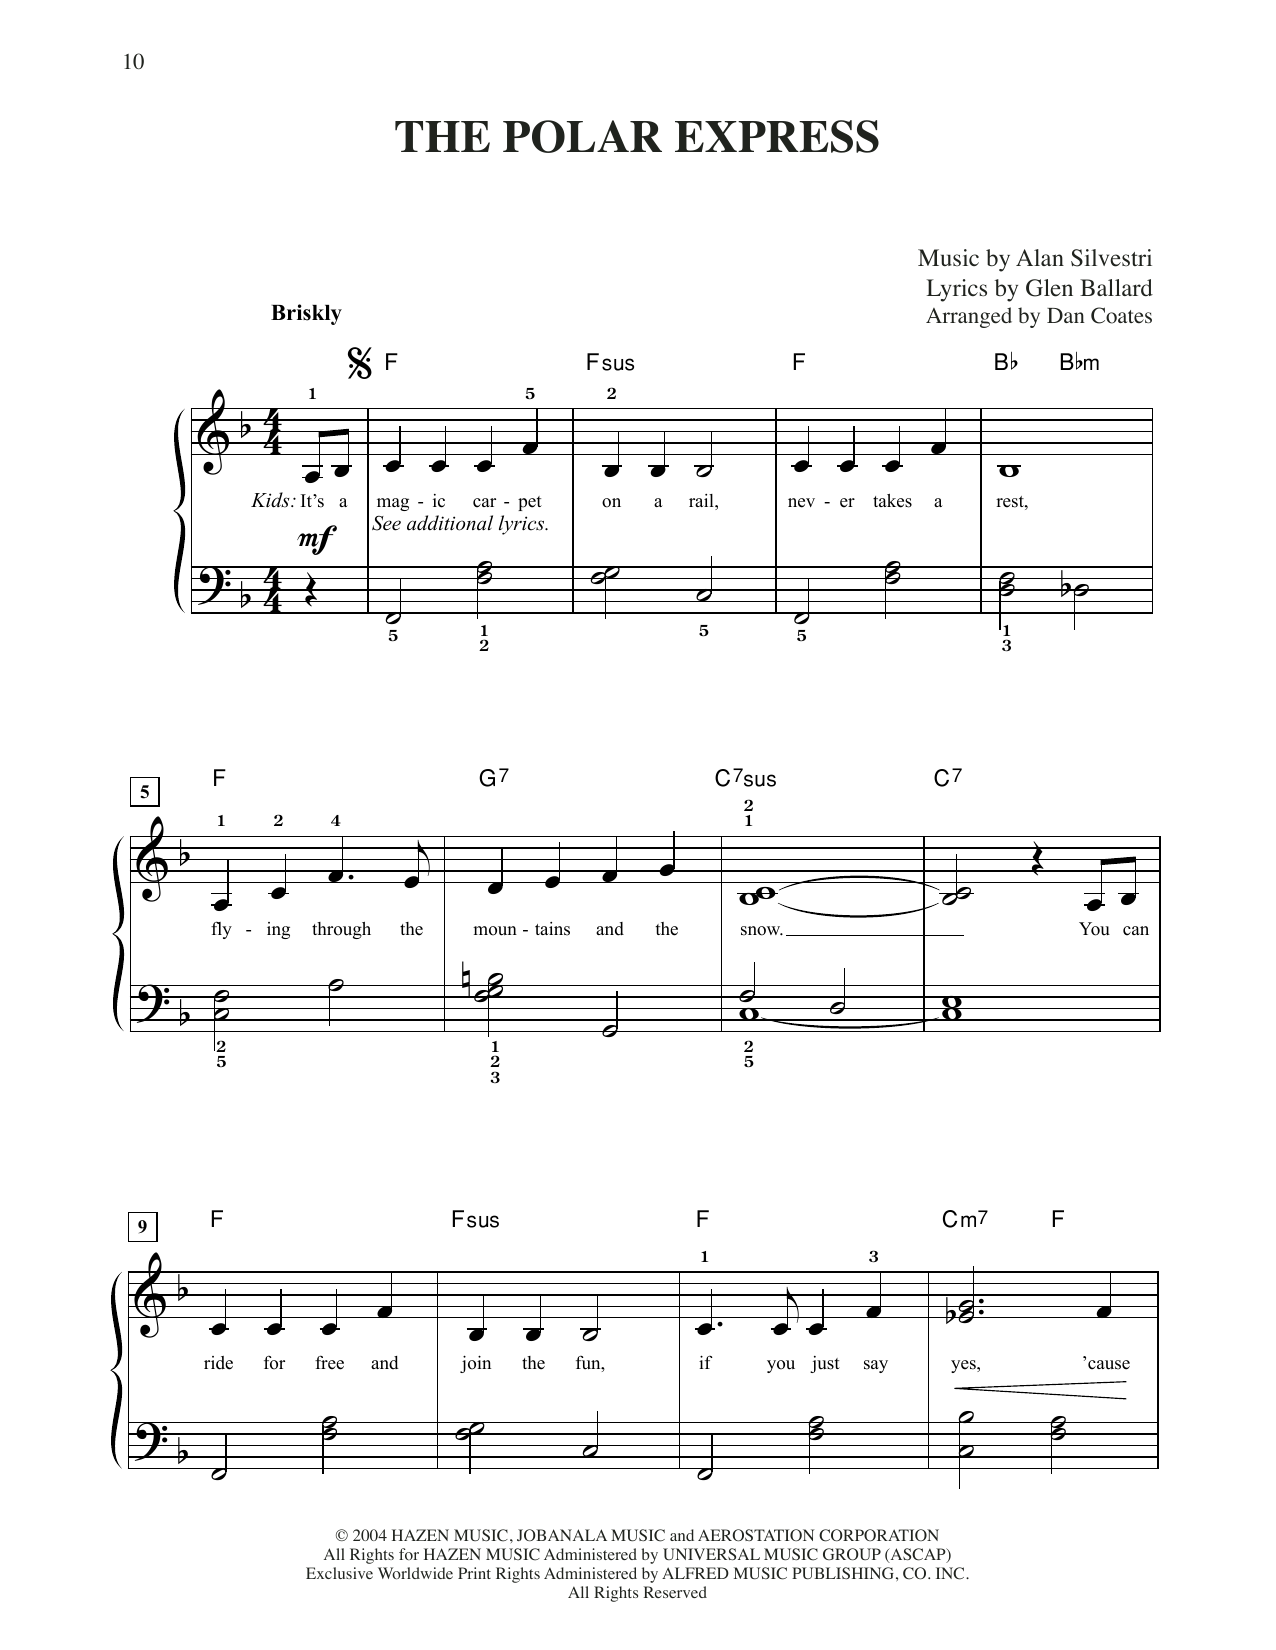 Glen Ballard and Alan Silvestri The Polar Express (arr. Dan Coates) Sheet Music Notes & Chords for Easy Piano - Download or Print PDF